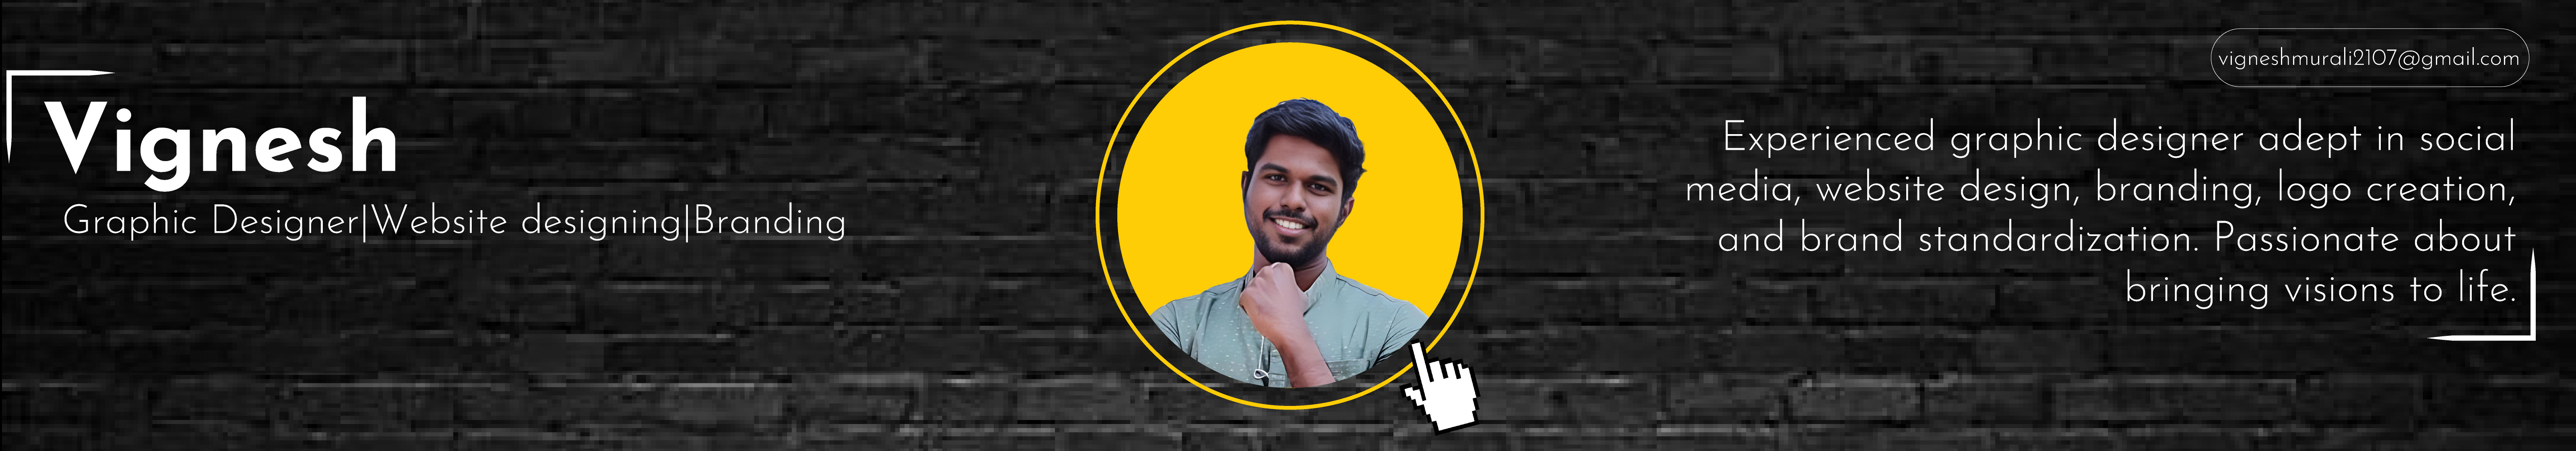 Vigneshwaran Muralidharan's profile banner